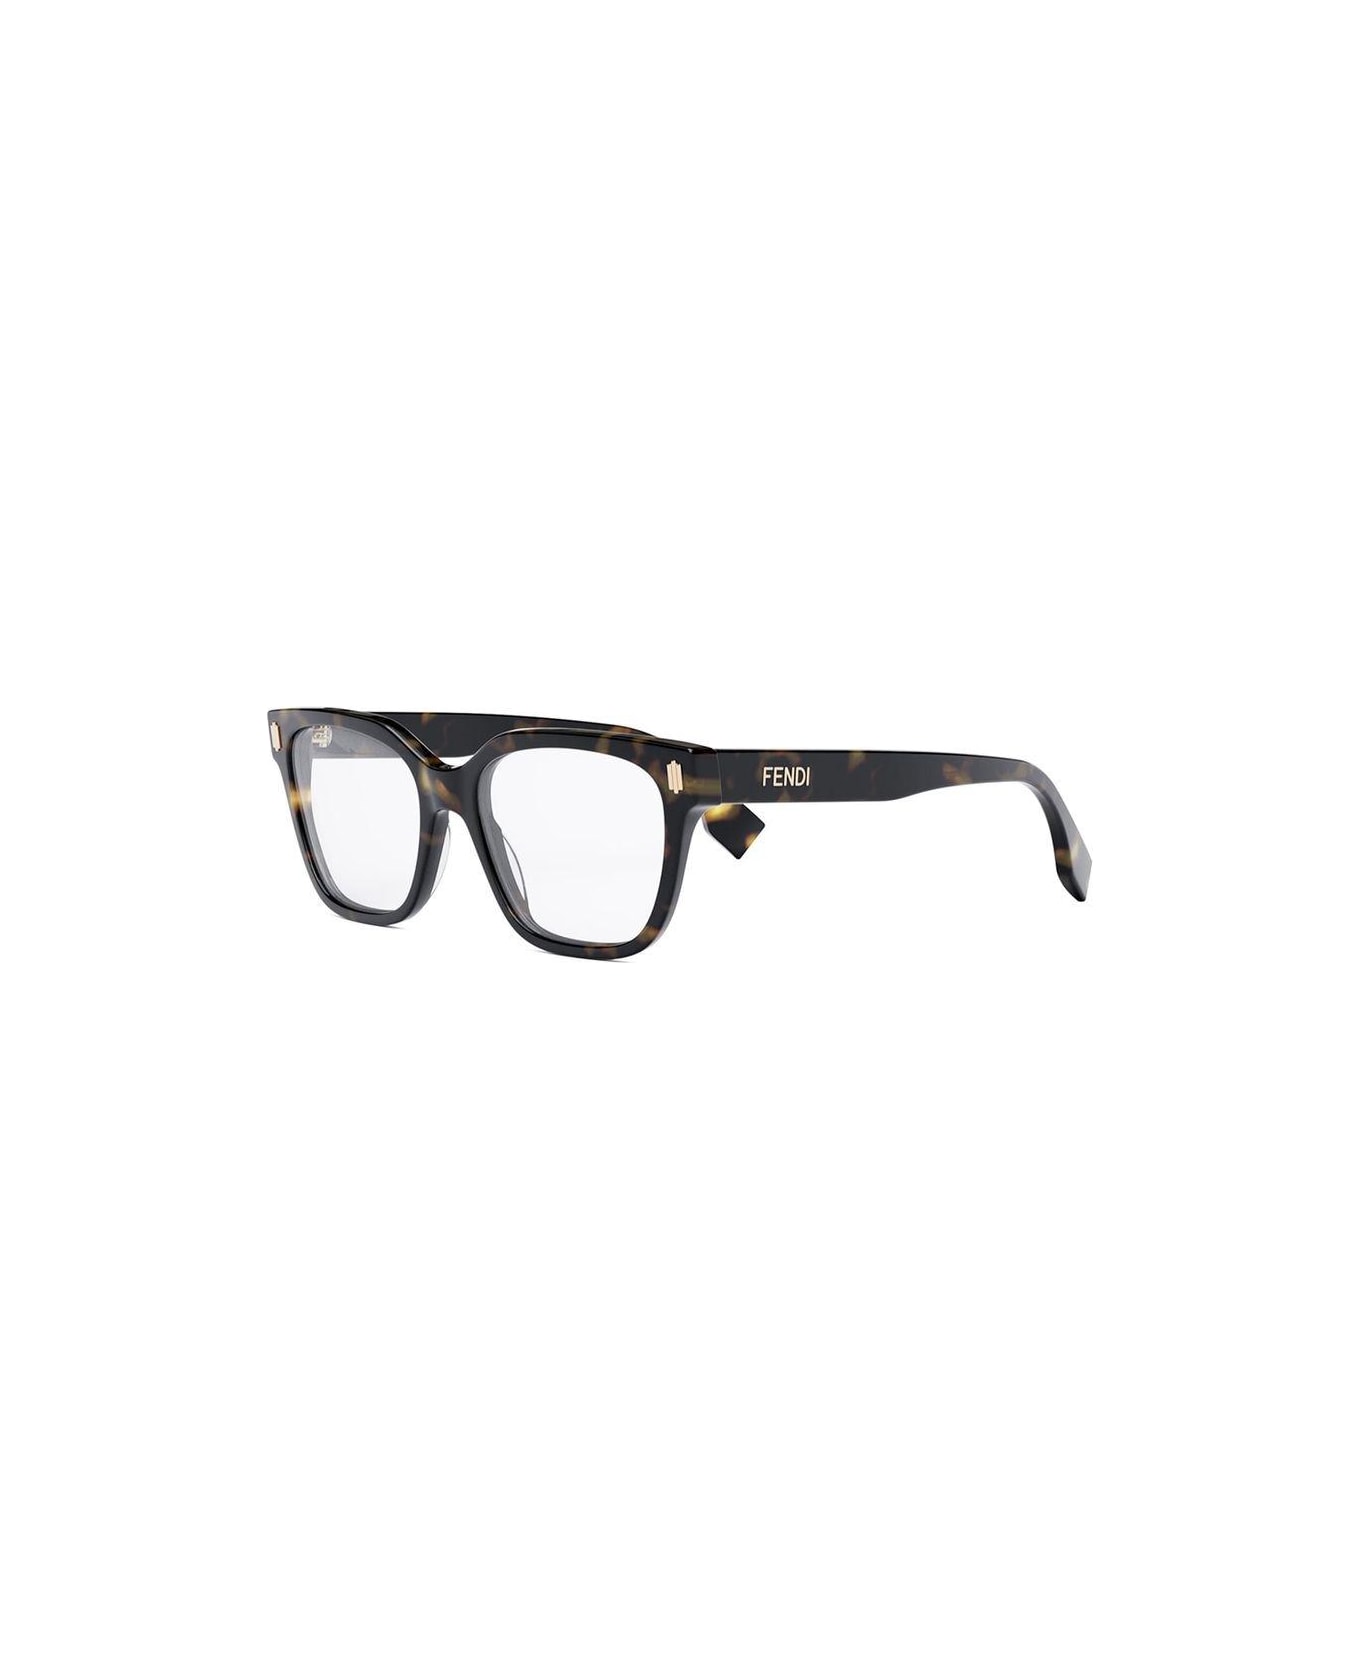 Fendi Eyewear Rectangle Frame Glasses - 052